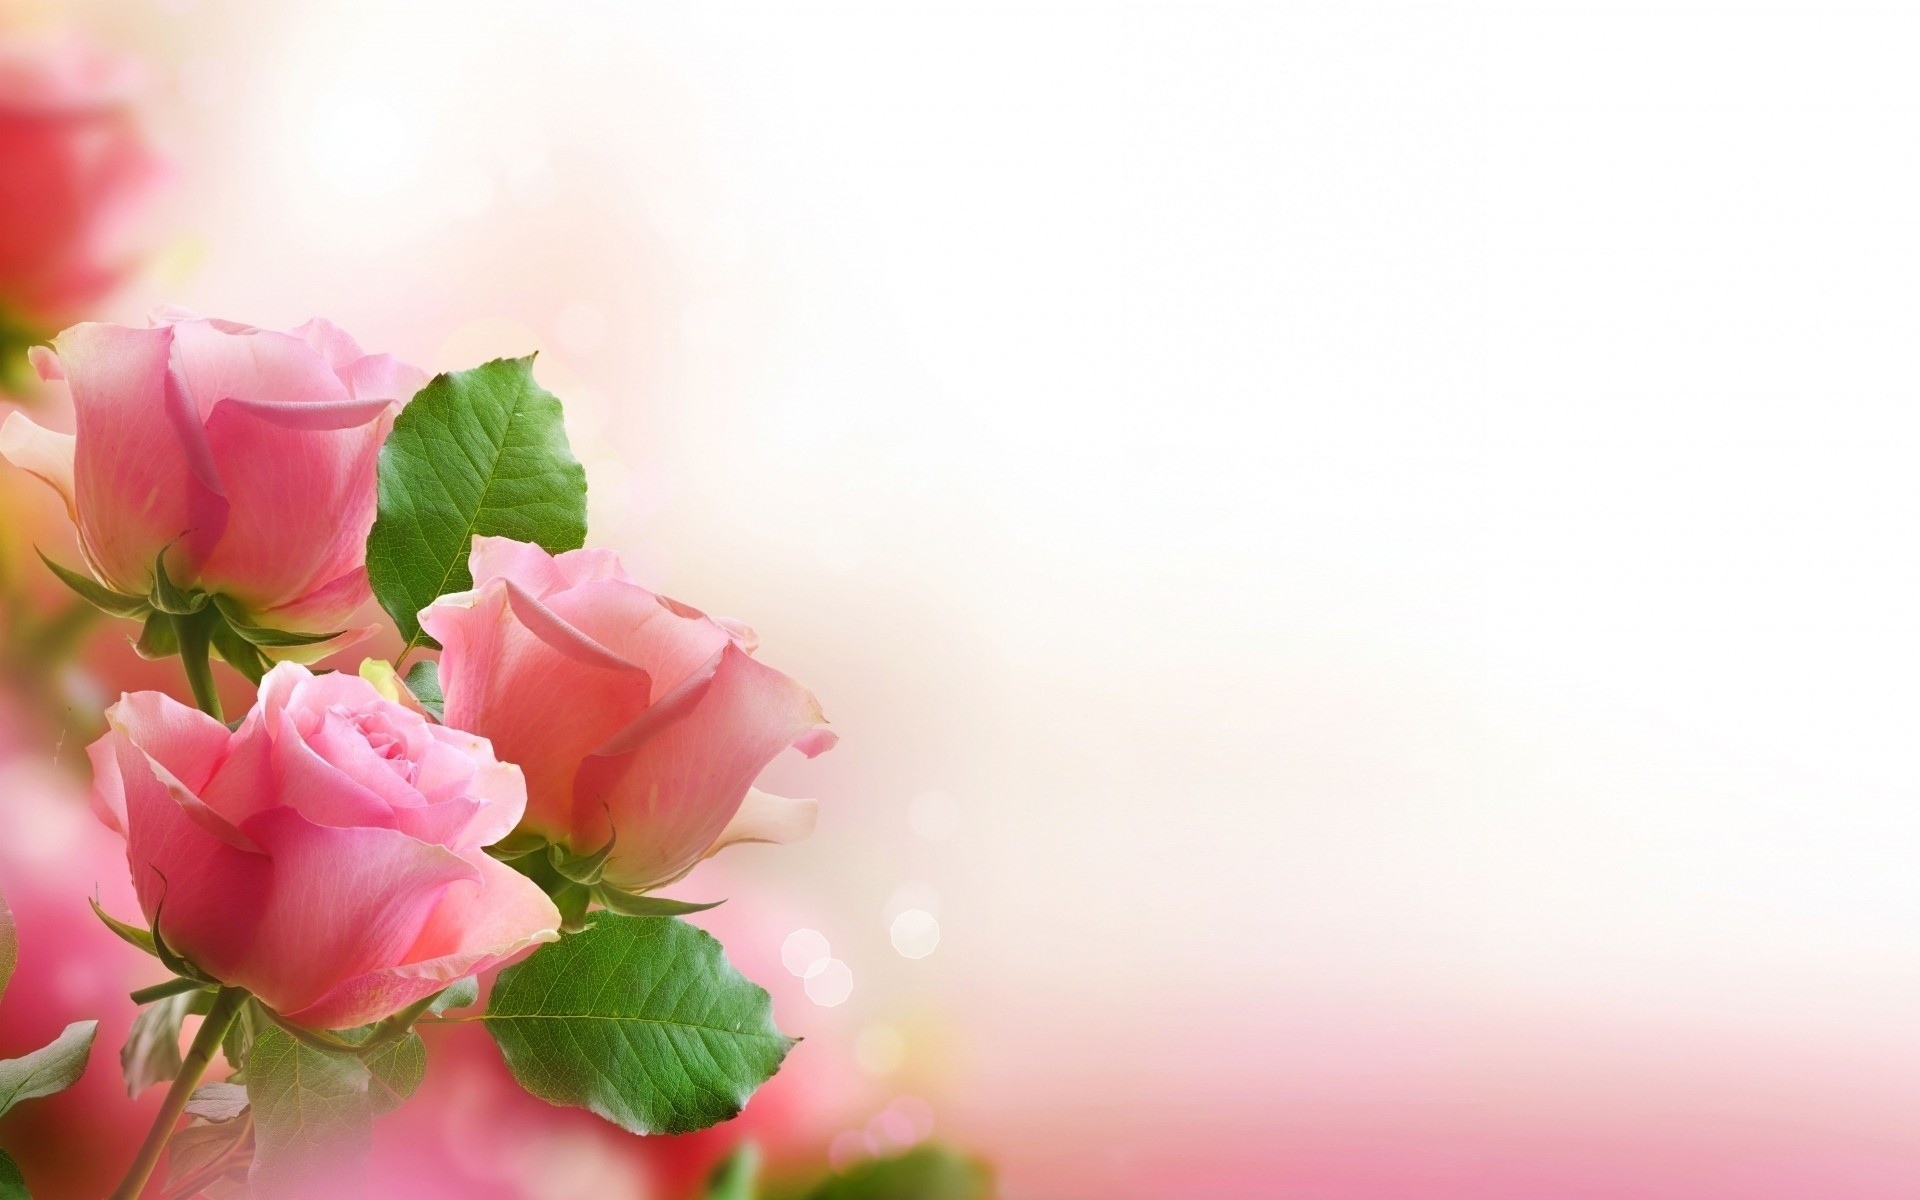 nature Flowers Art Roses Love Romance Pink Leaves Mood